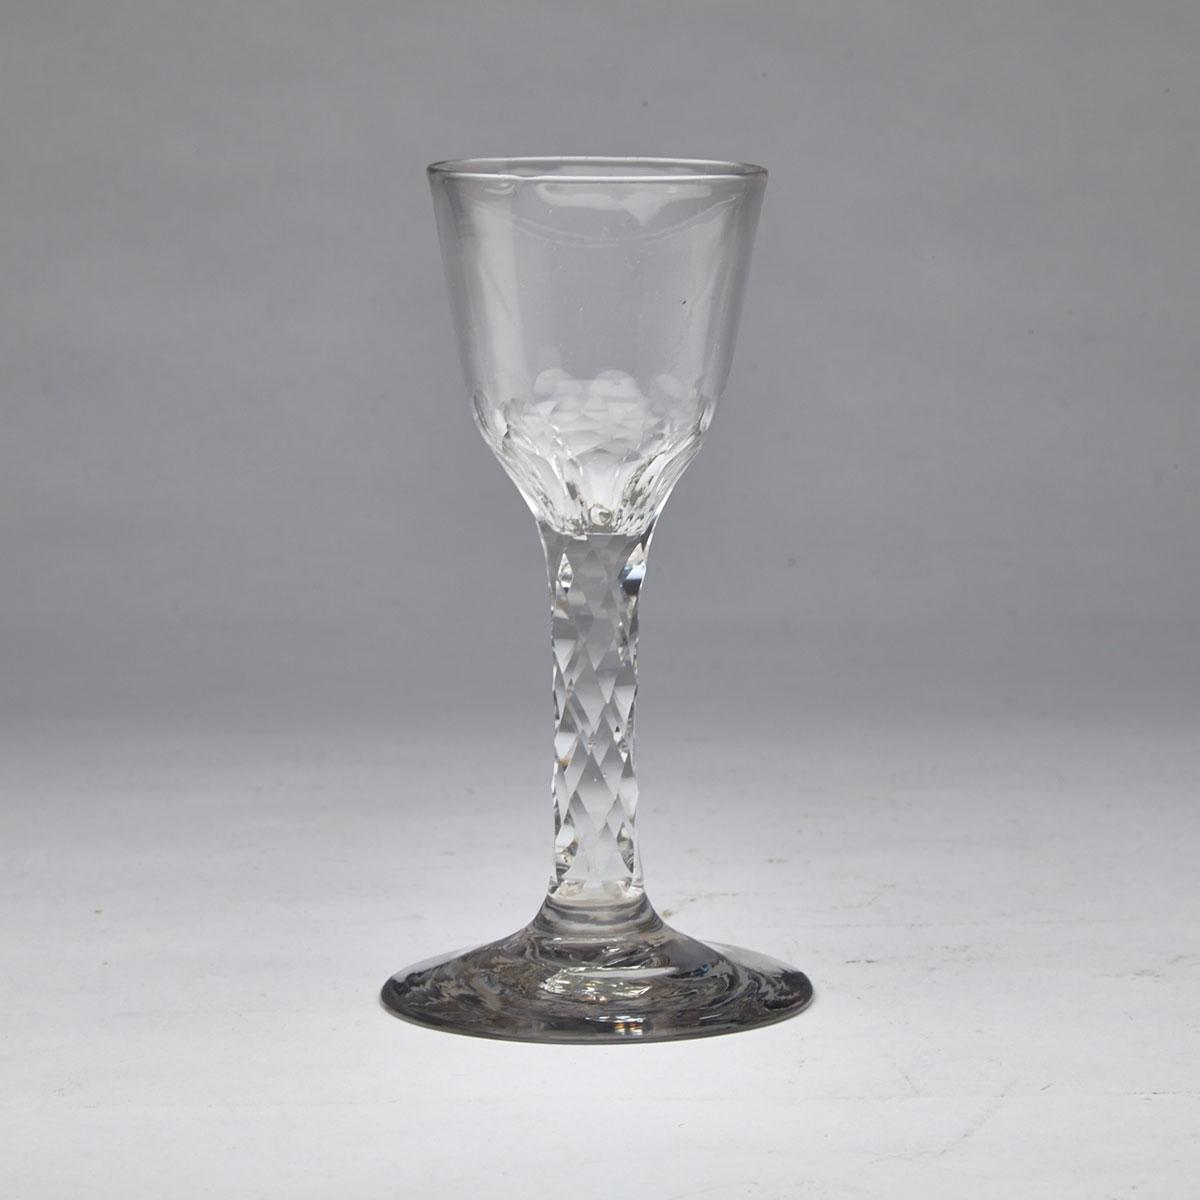 English Cut Glass Wine, c.1760-80